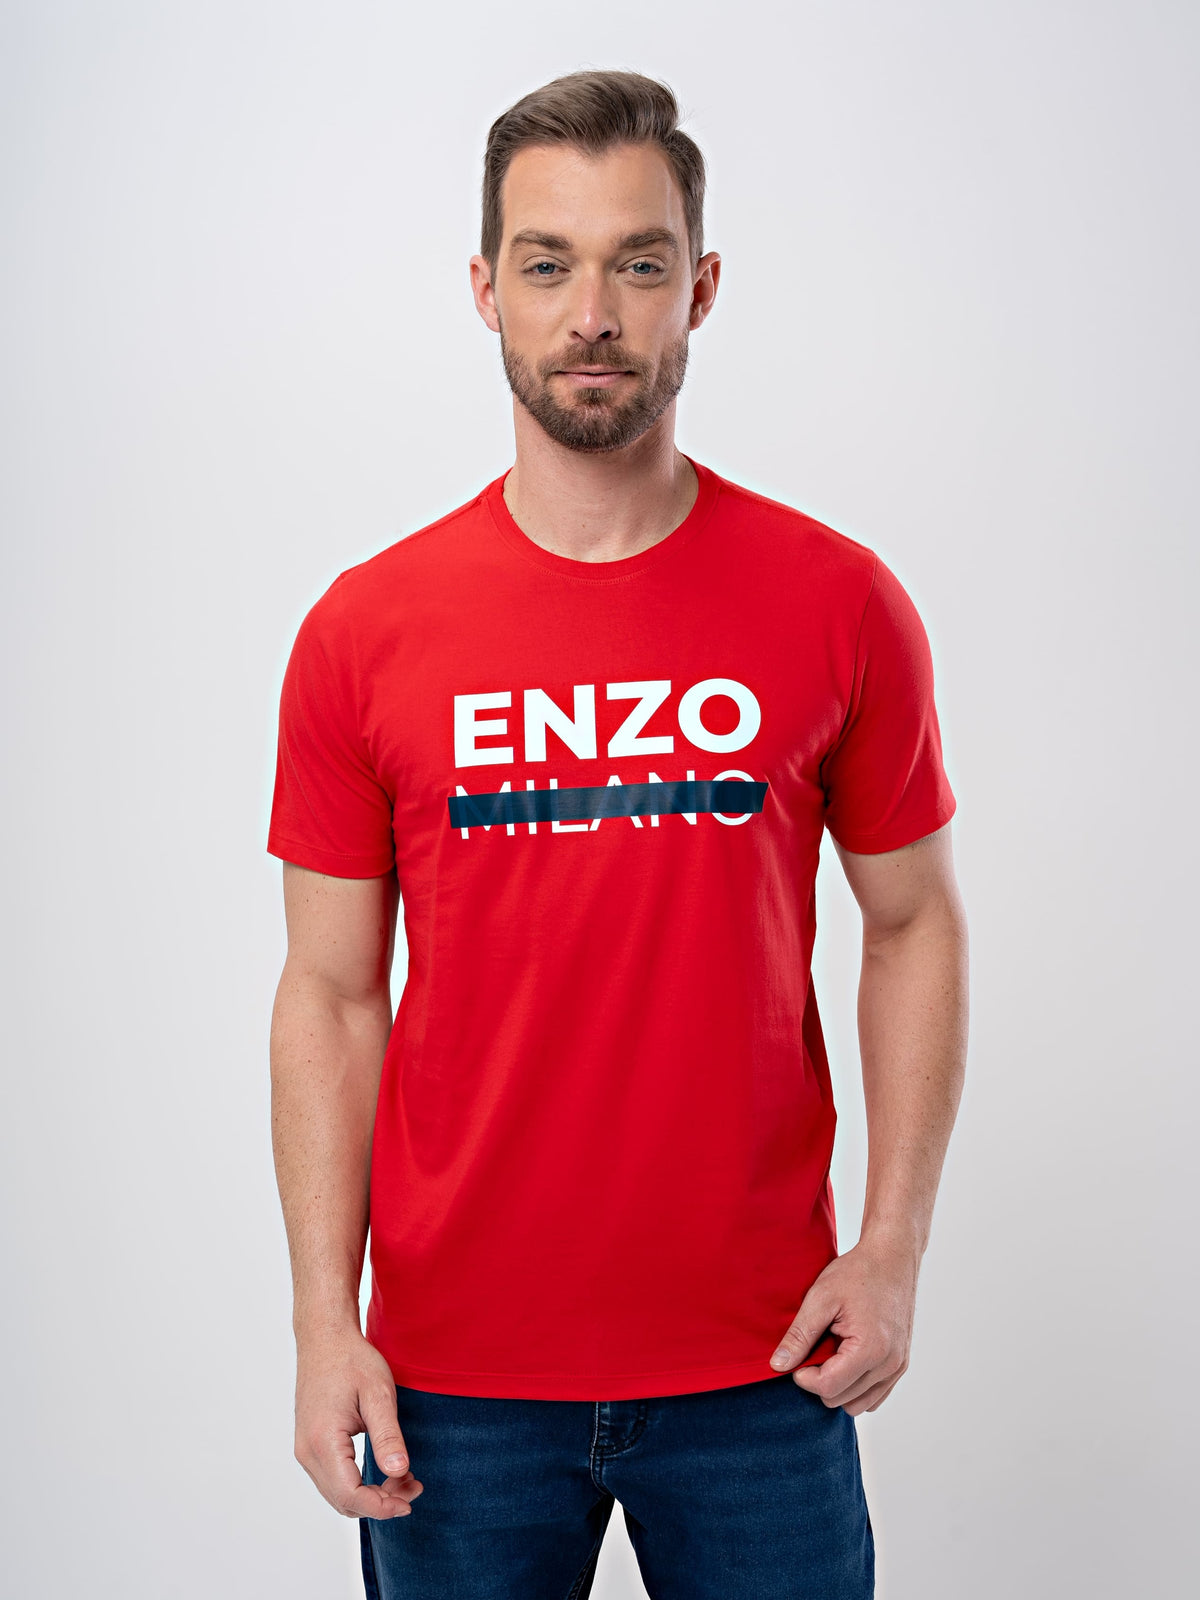 Camiseta Soft Enzo Milano